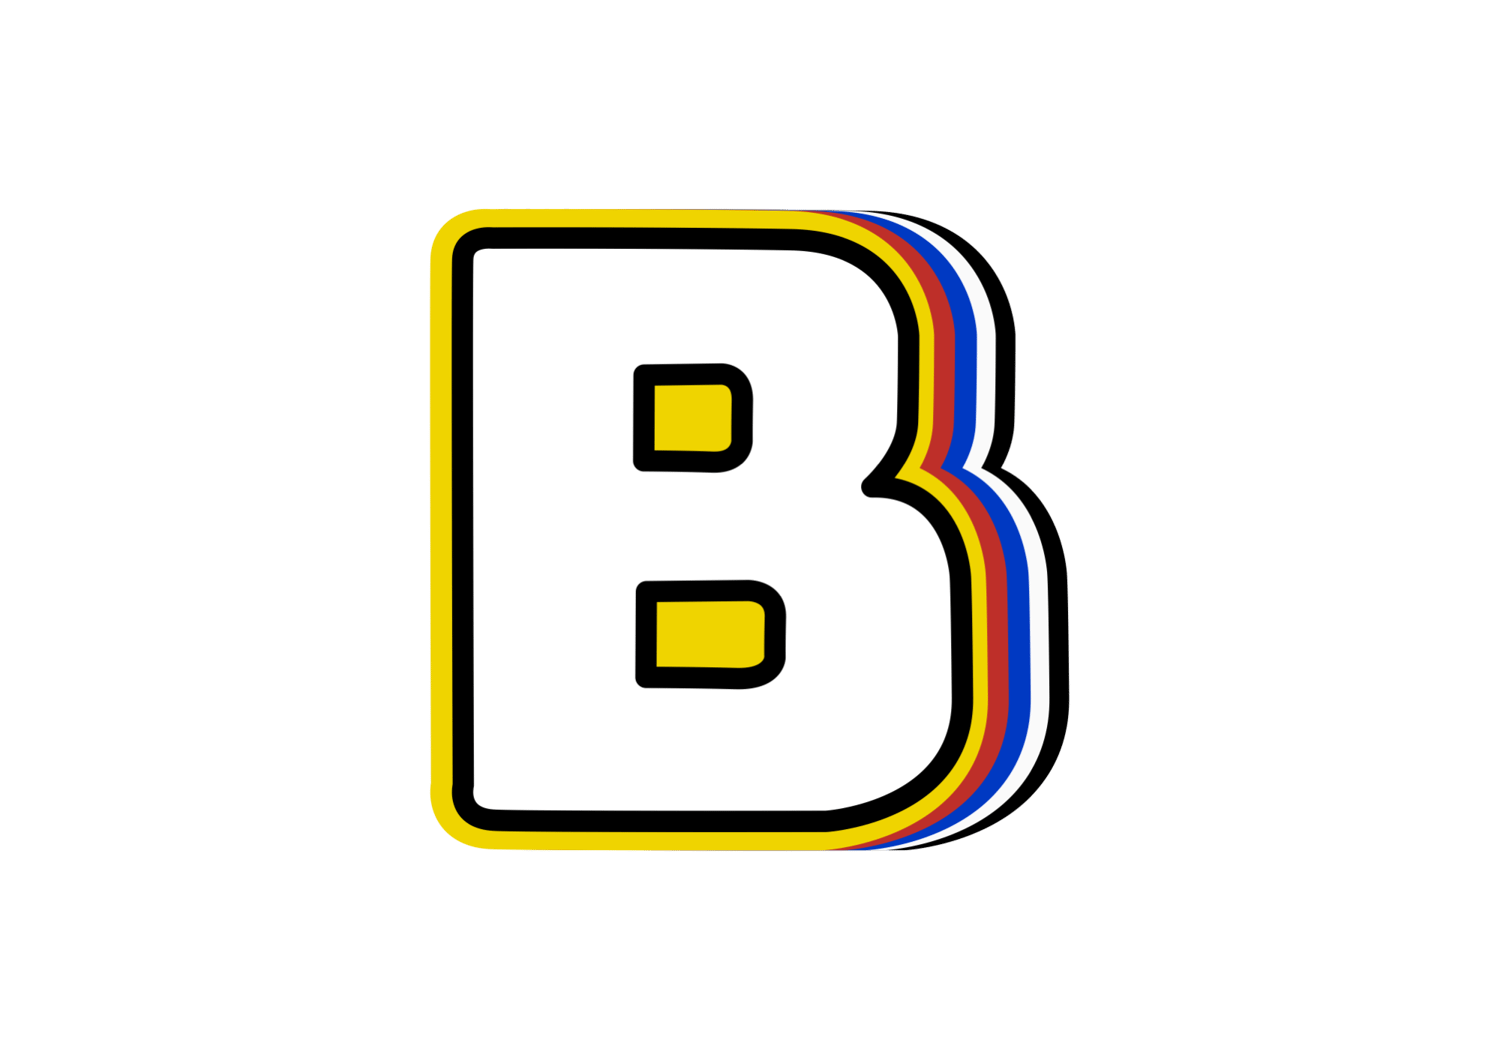 TheBricketeer.com "The Bricketeer" Logo